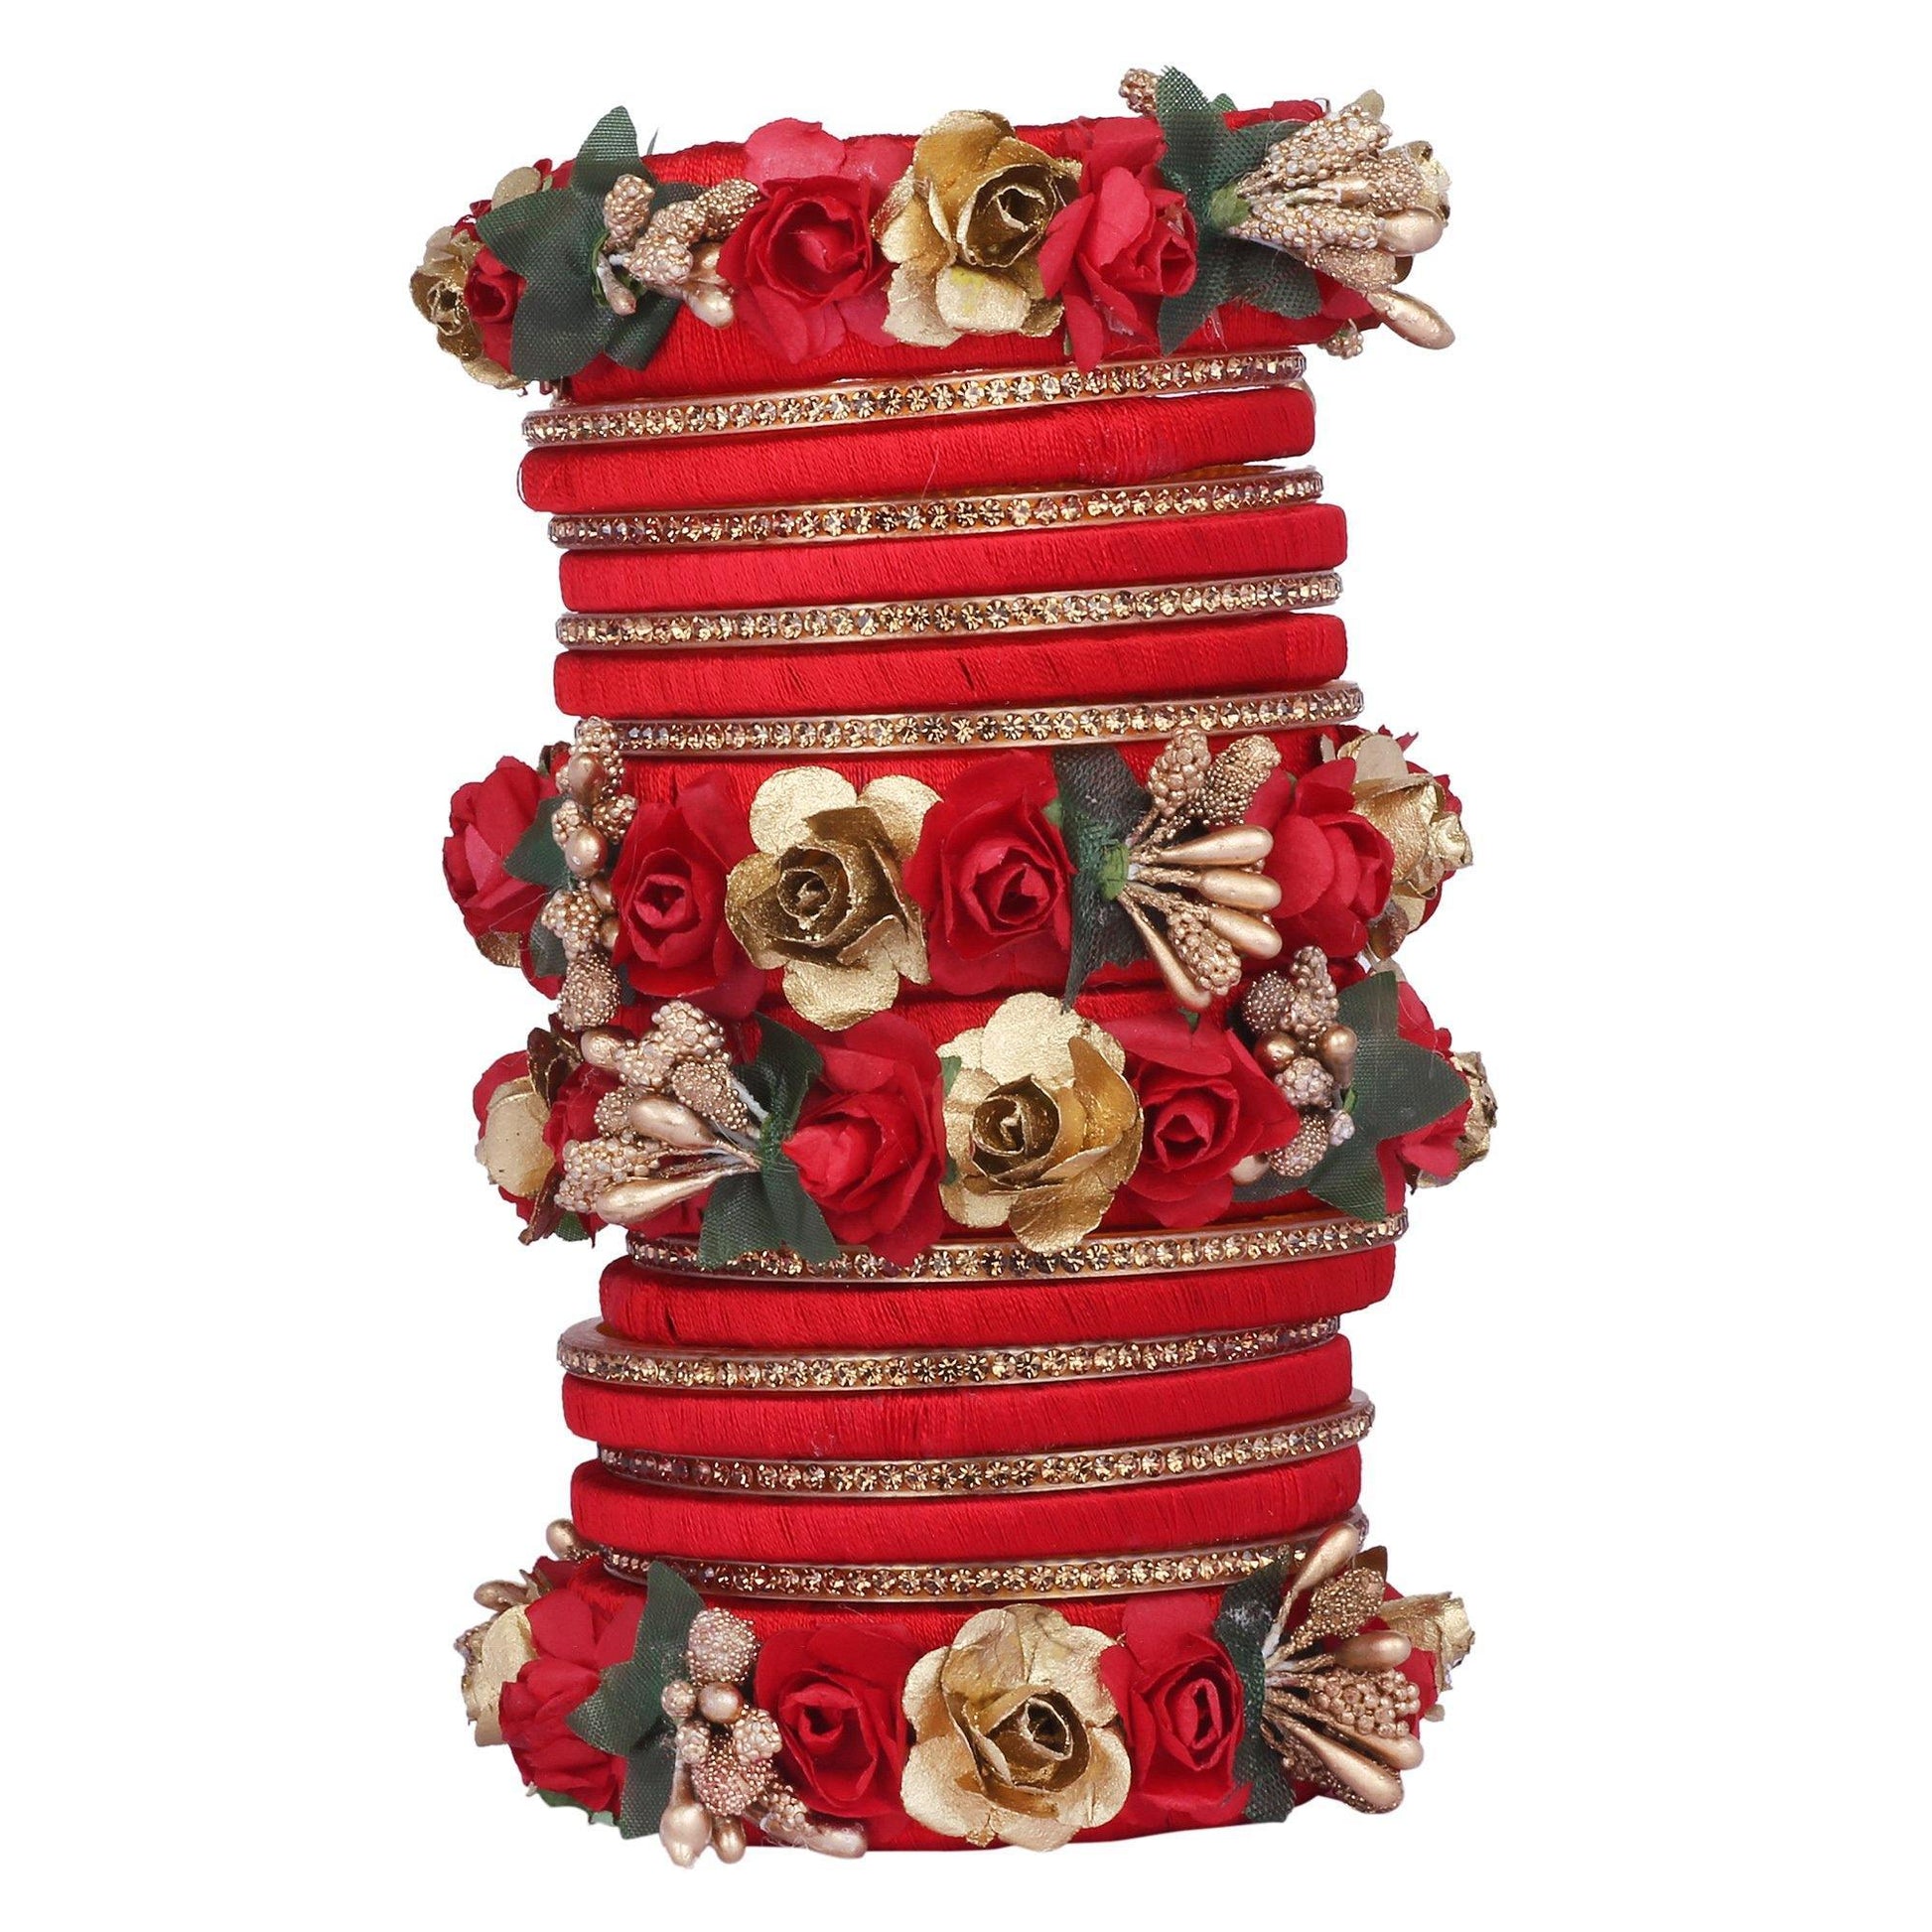 sukriti stylish designer party wedding wear flower silk thread red bangles for girls & women – set of 18